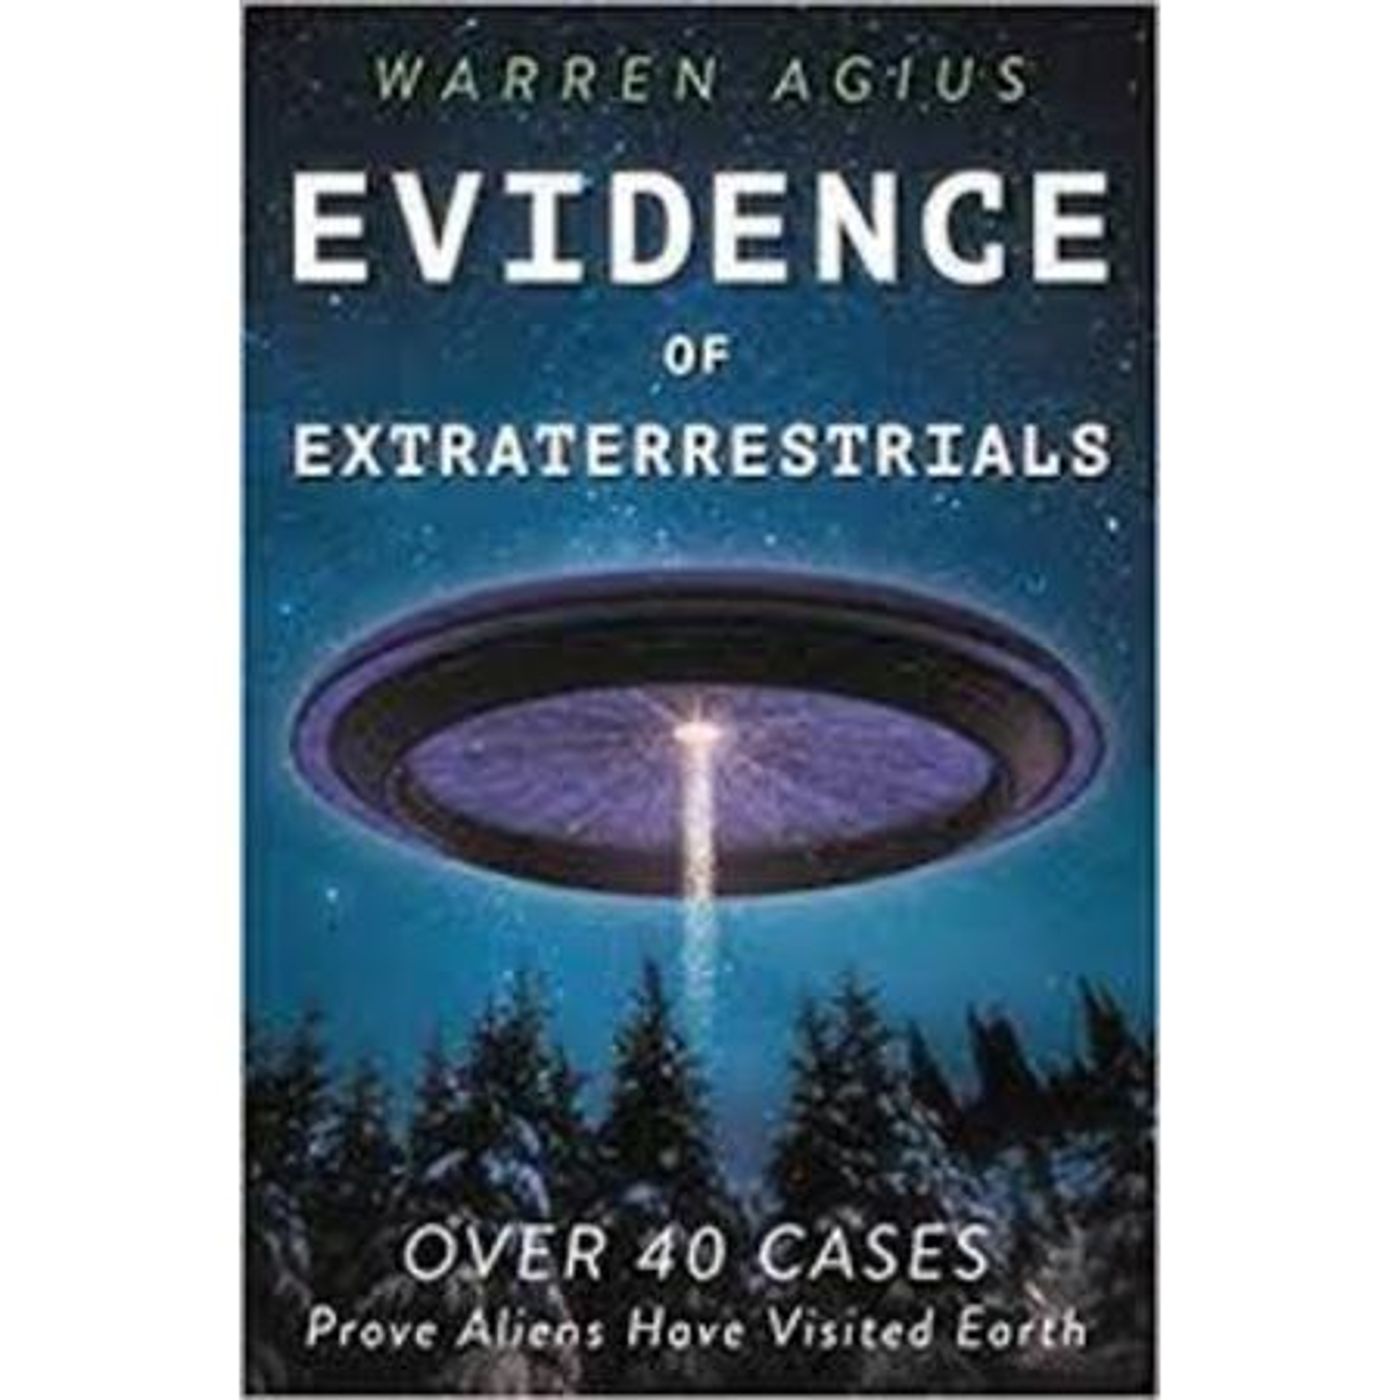 Evidence of Extraterrestrials with author Warren Agius